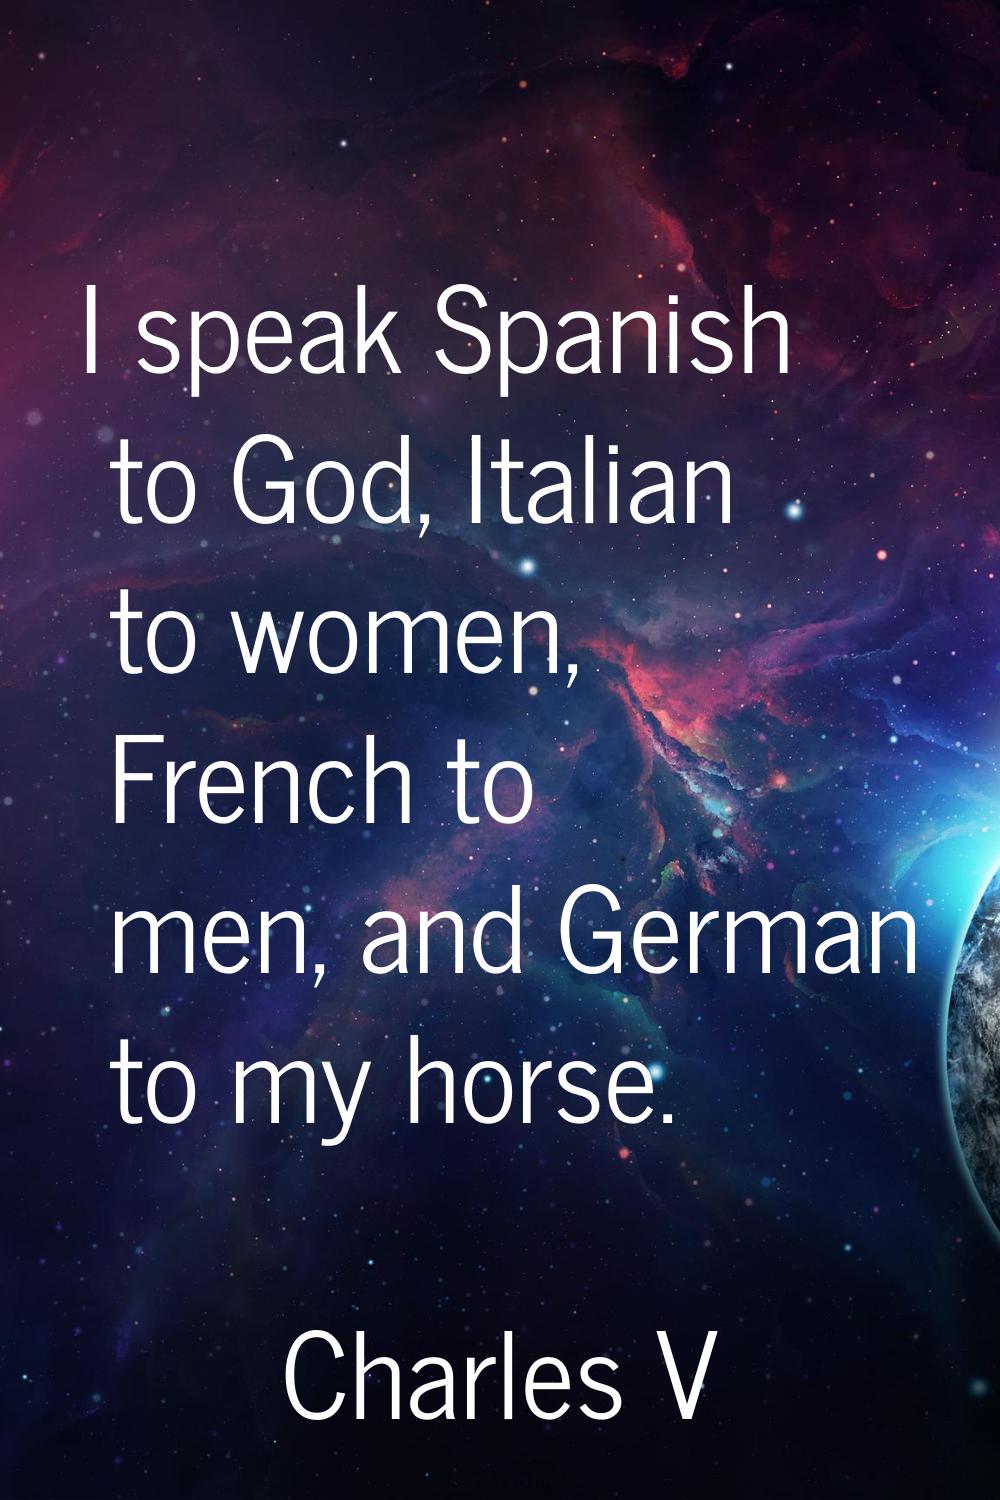 I speak Spanish to God, Italian to women, French to men, and German to my horse.